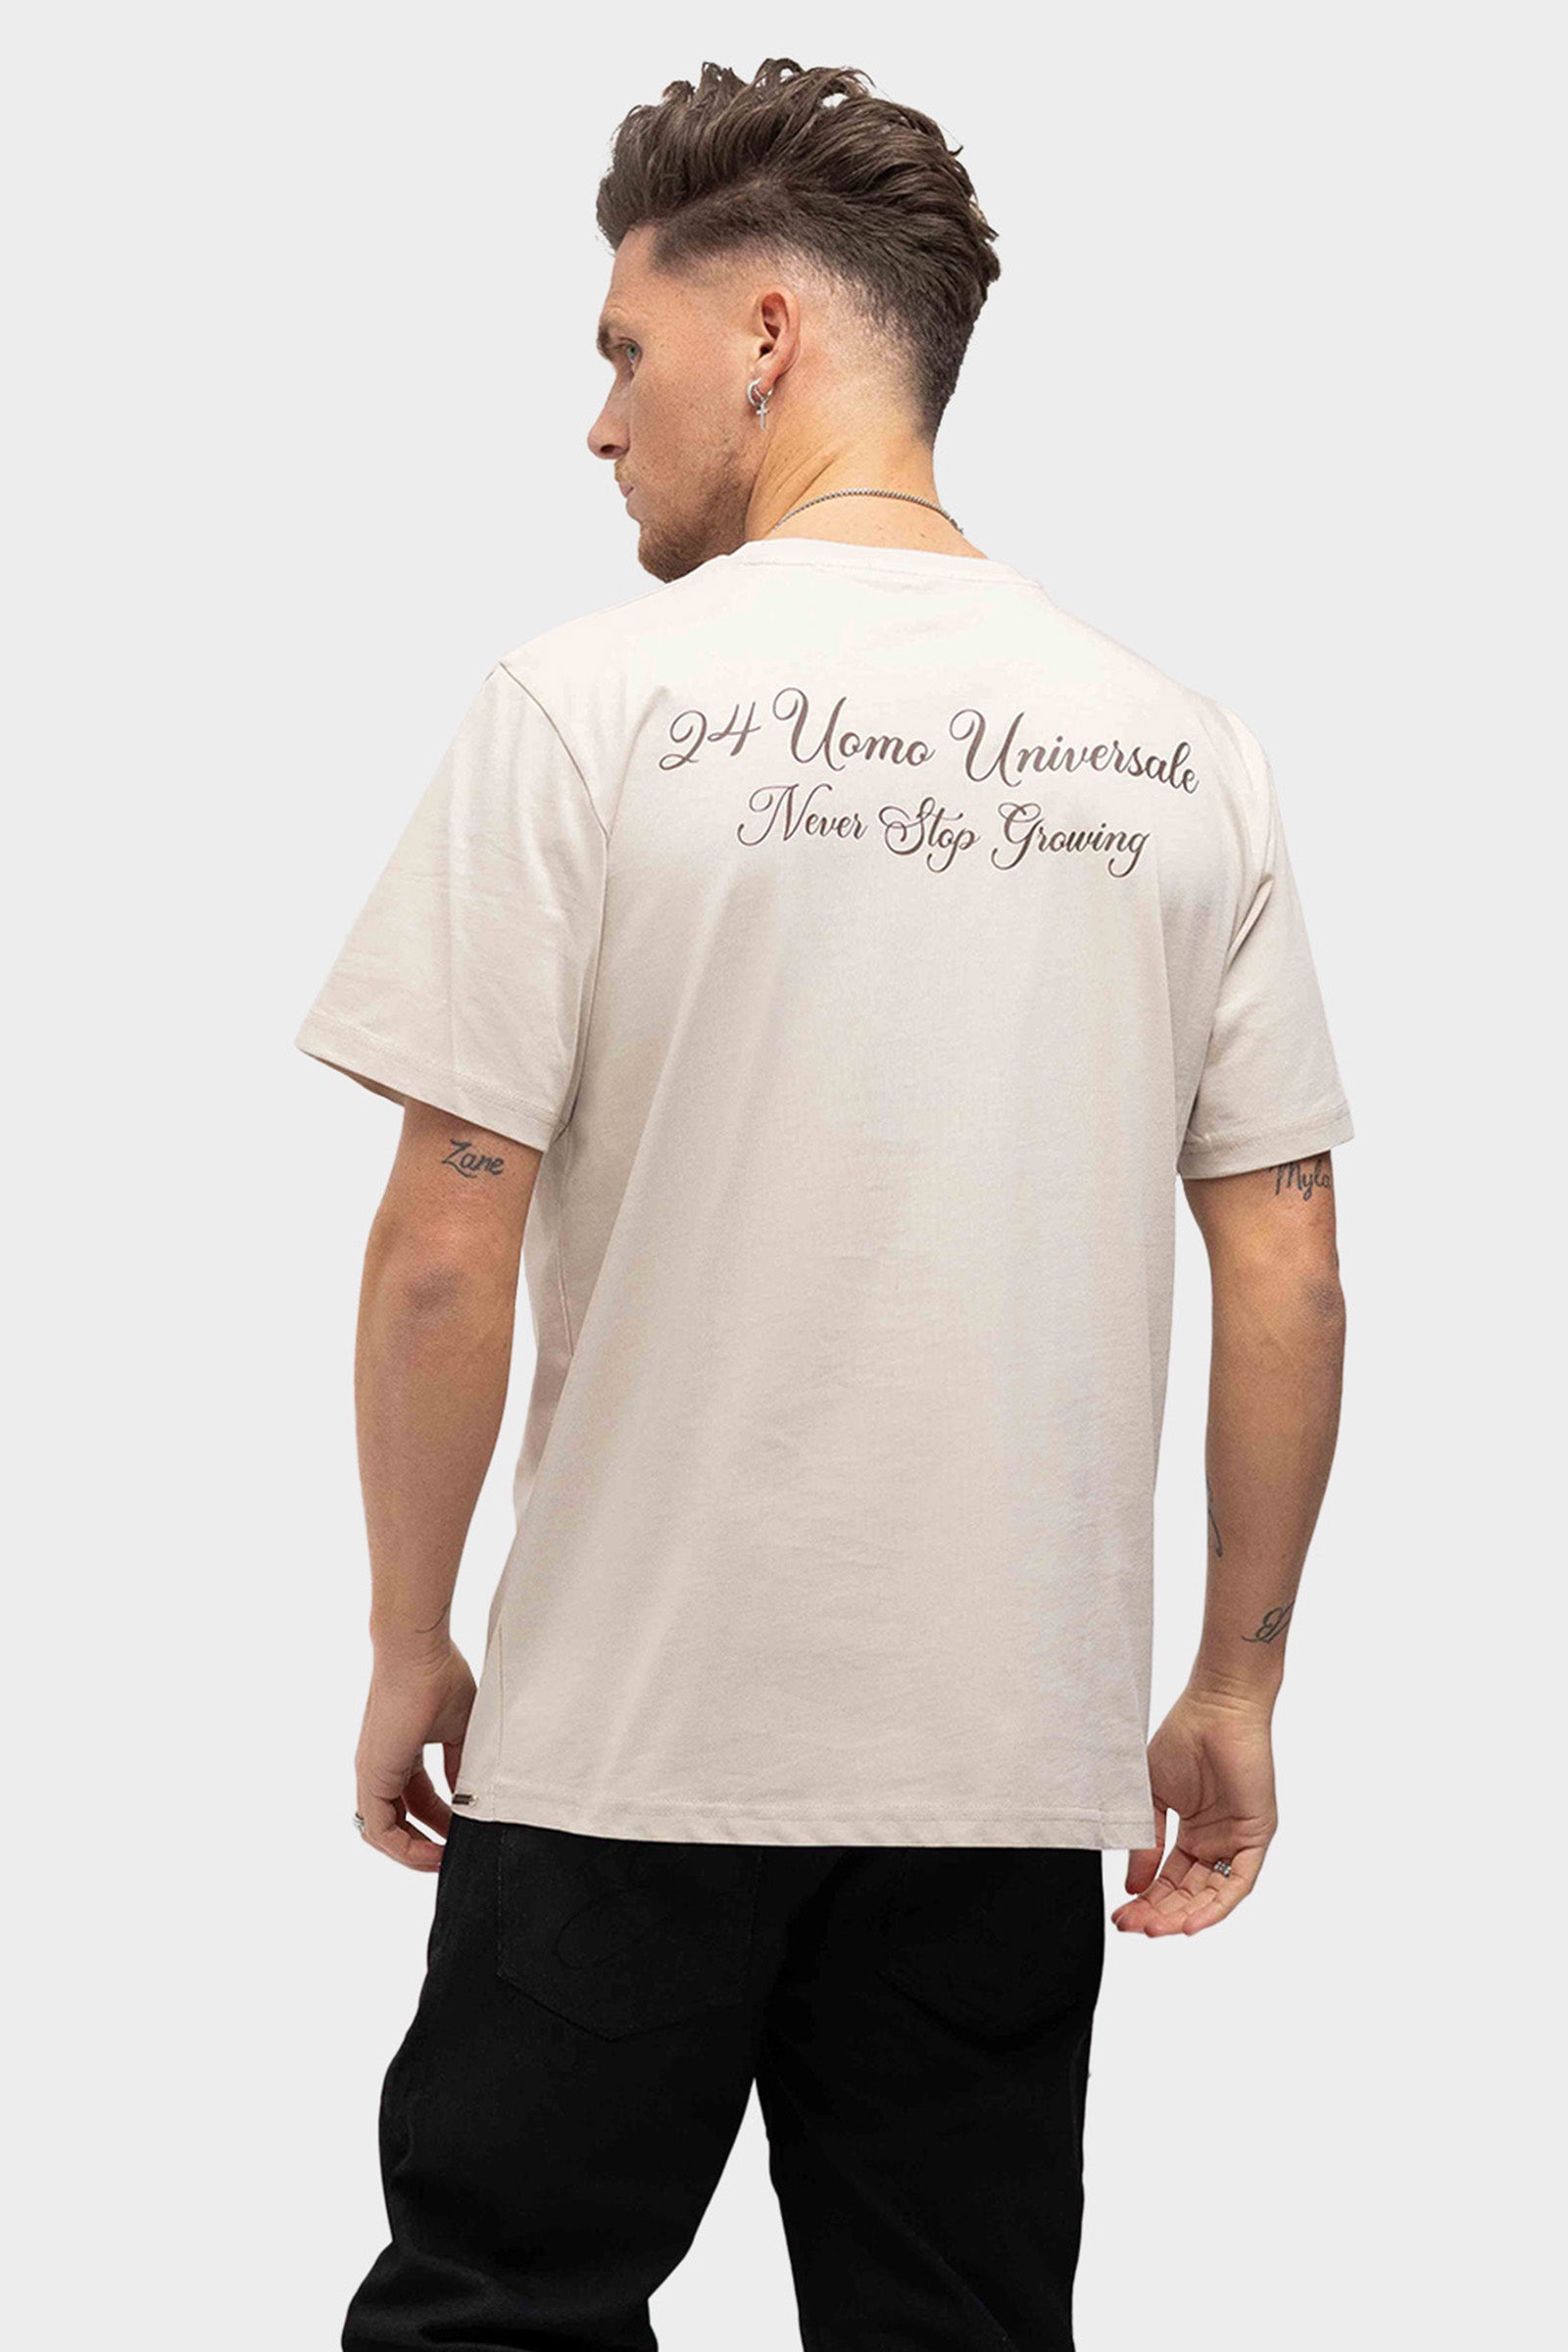 24 Uomo Universale 2.0 T-shirt Beige PRE-ORDER 5 APRIL